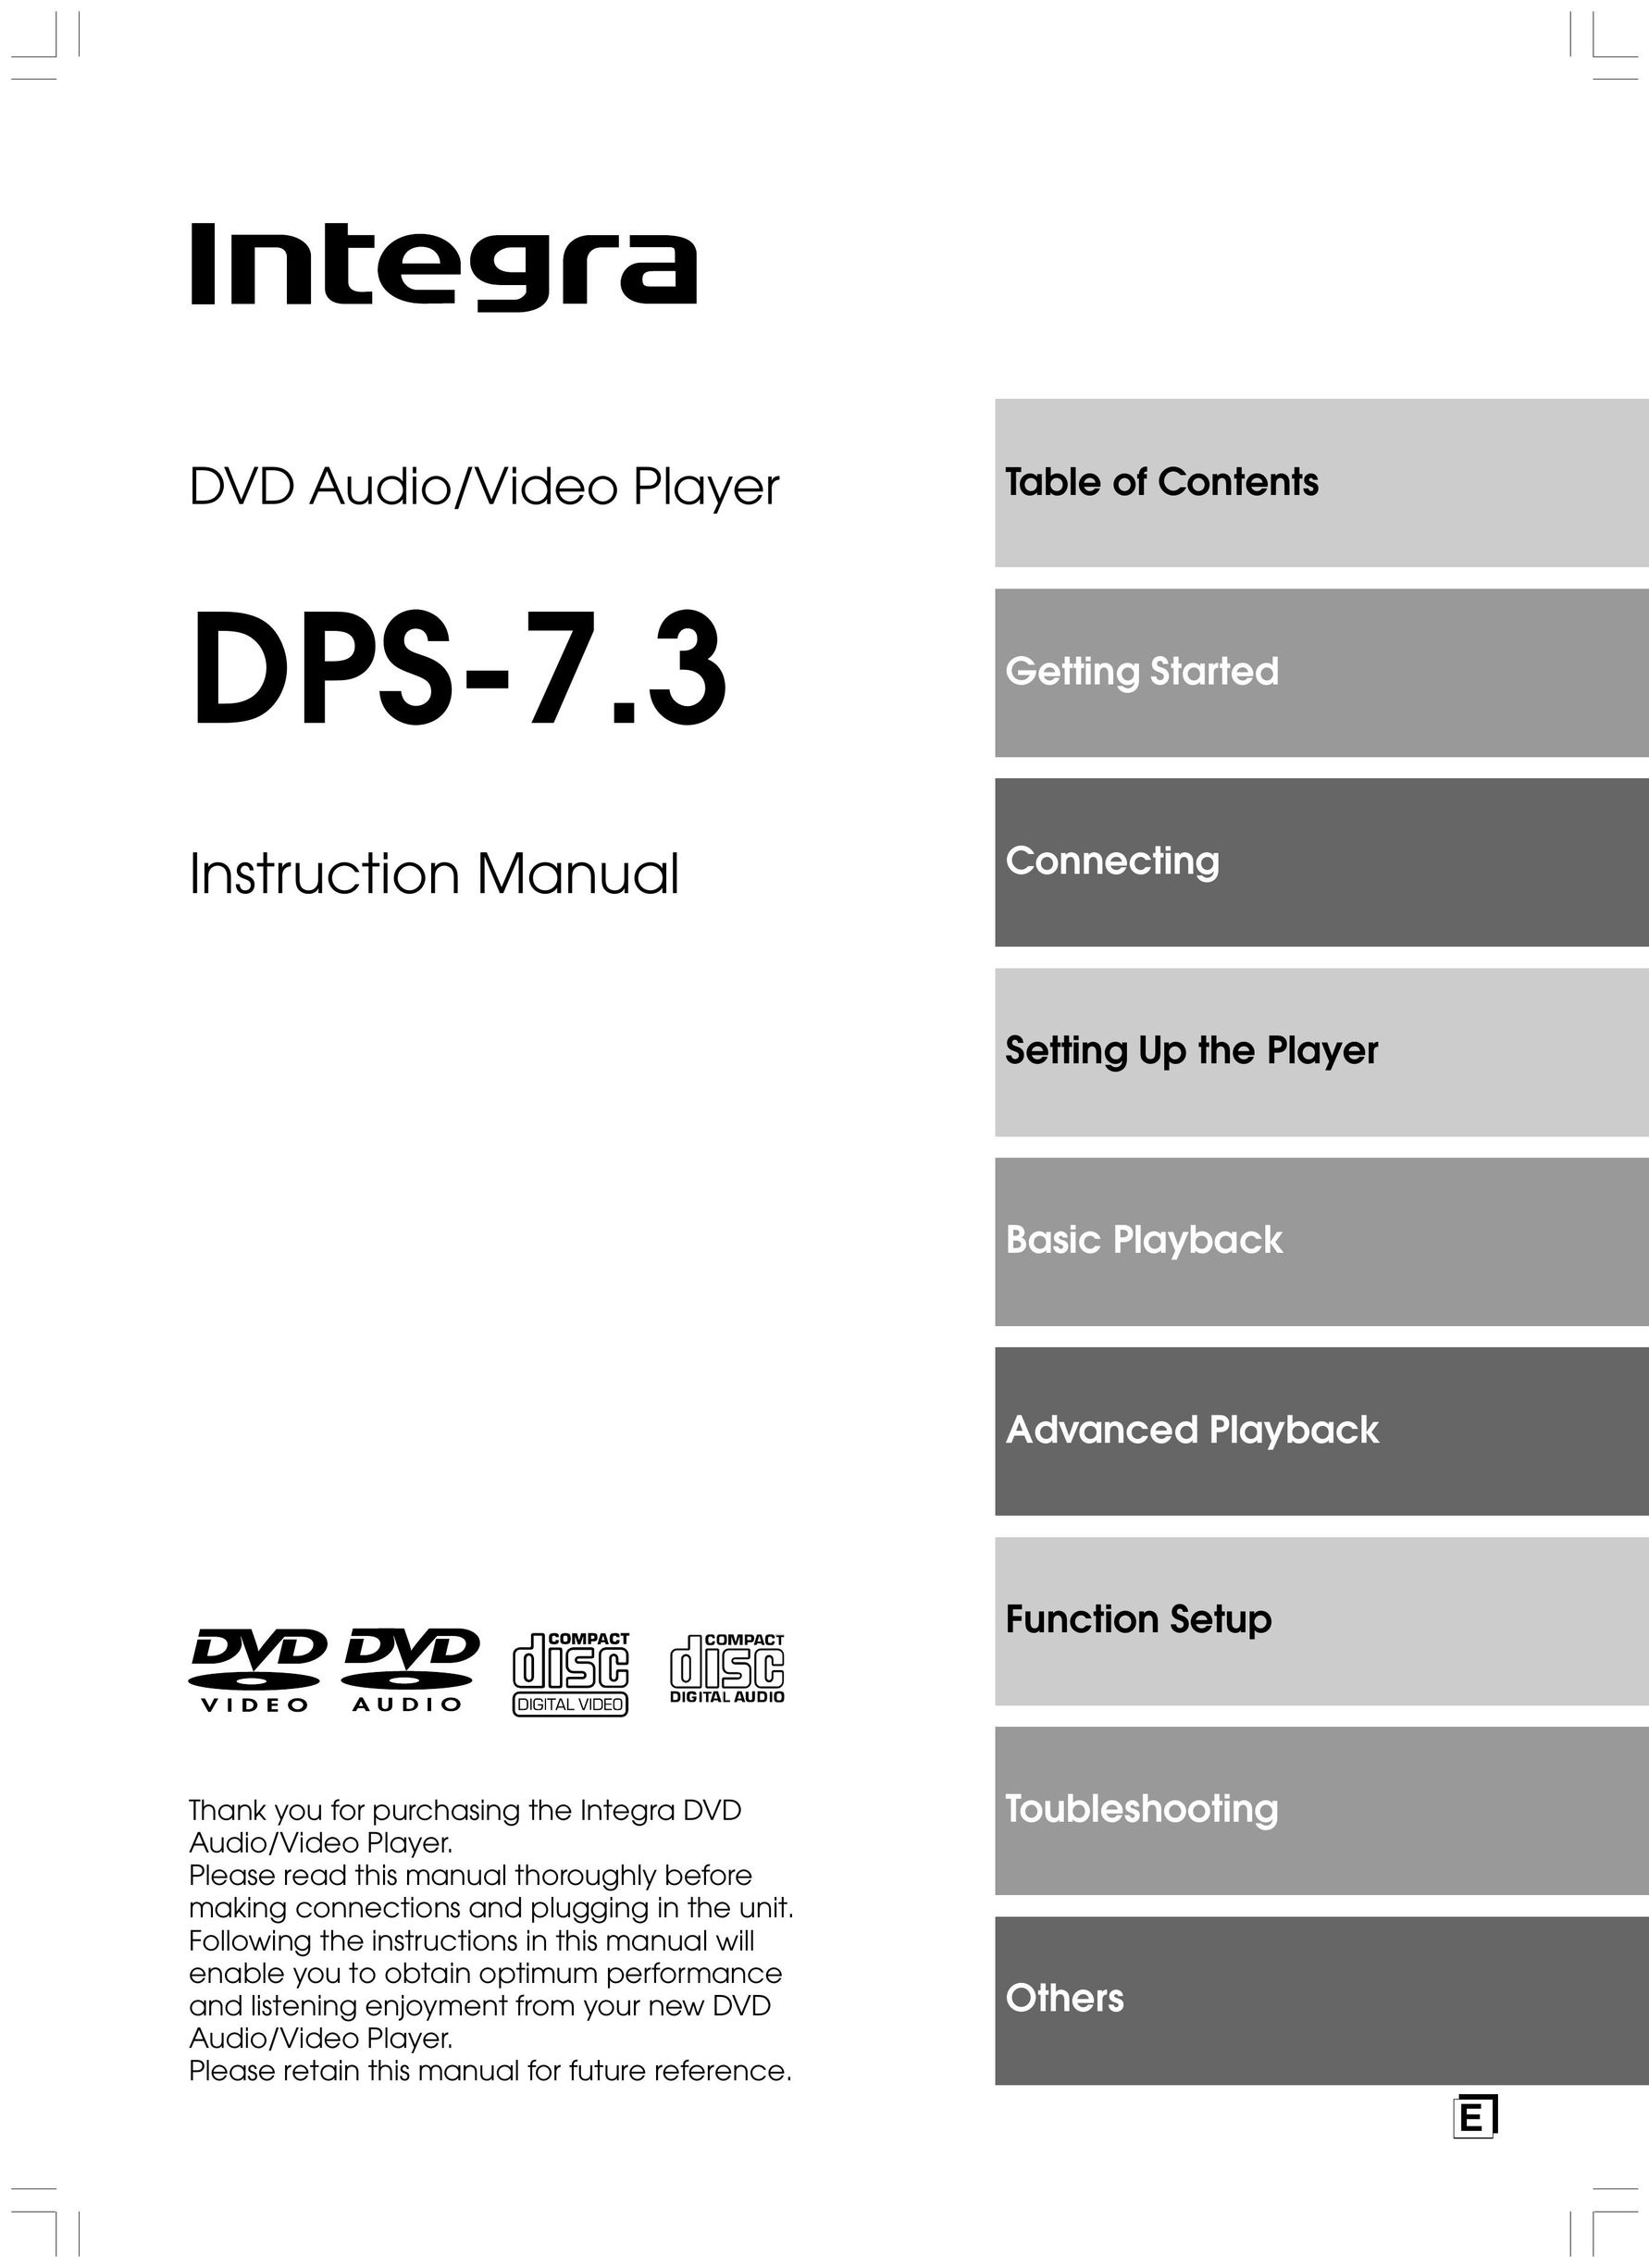 Integra DPS-7.3 DVD Player User Manual